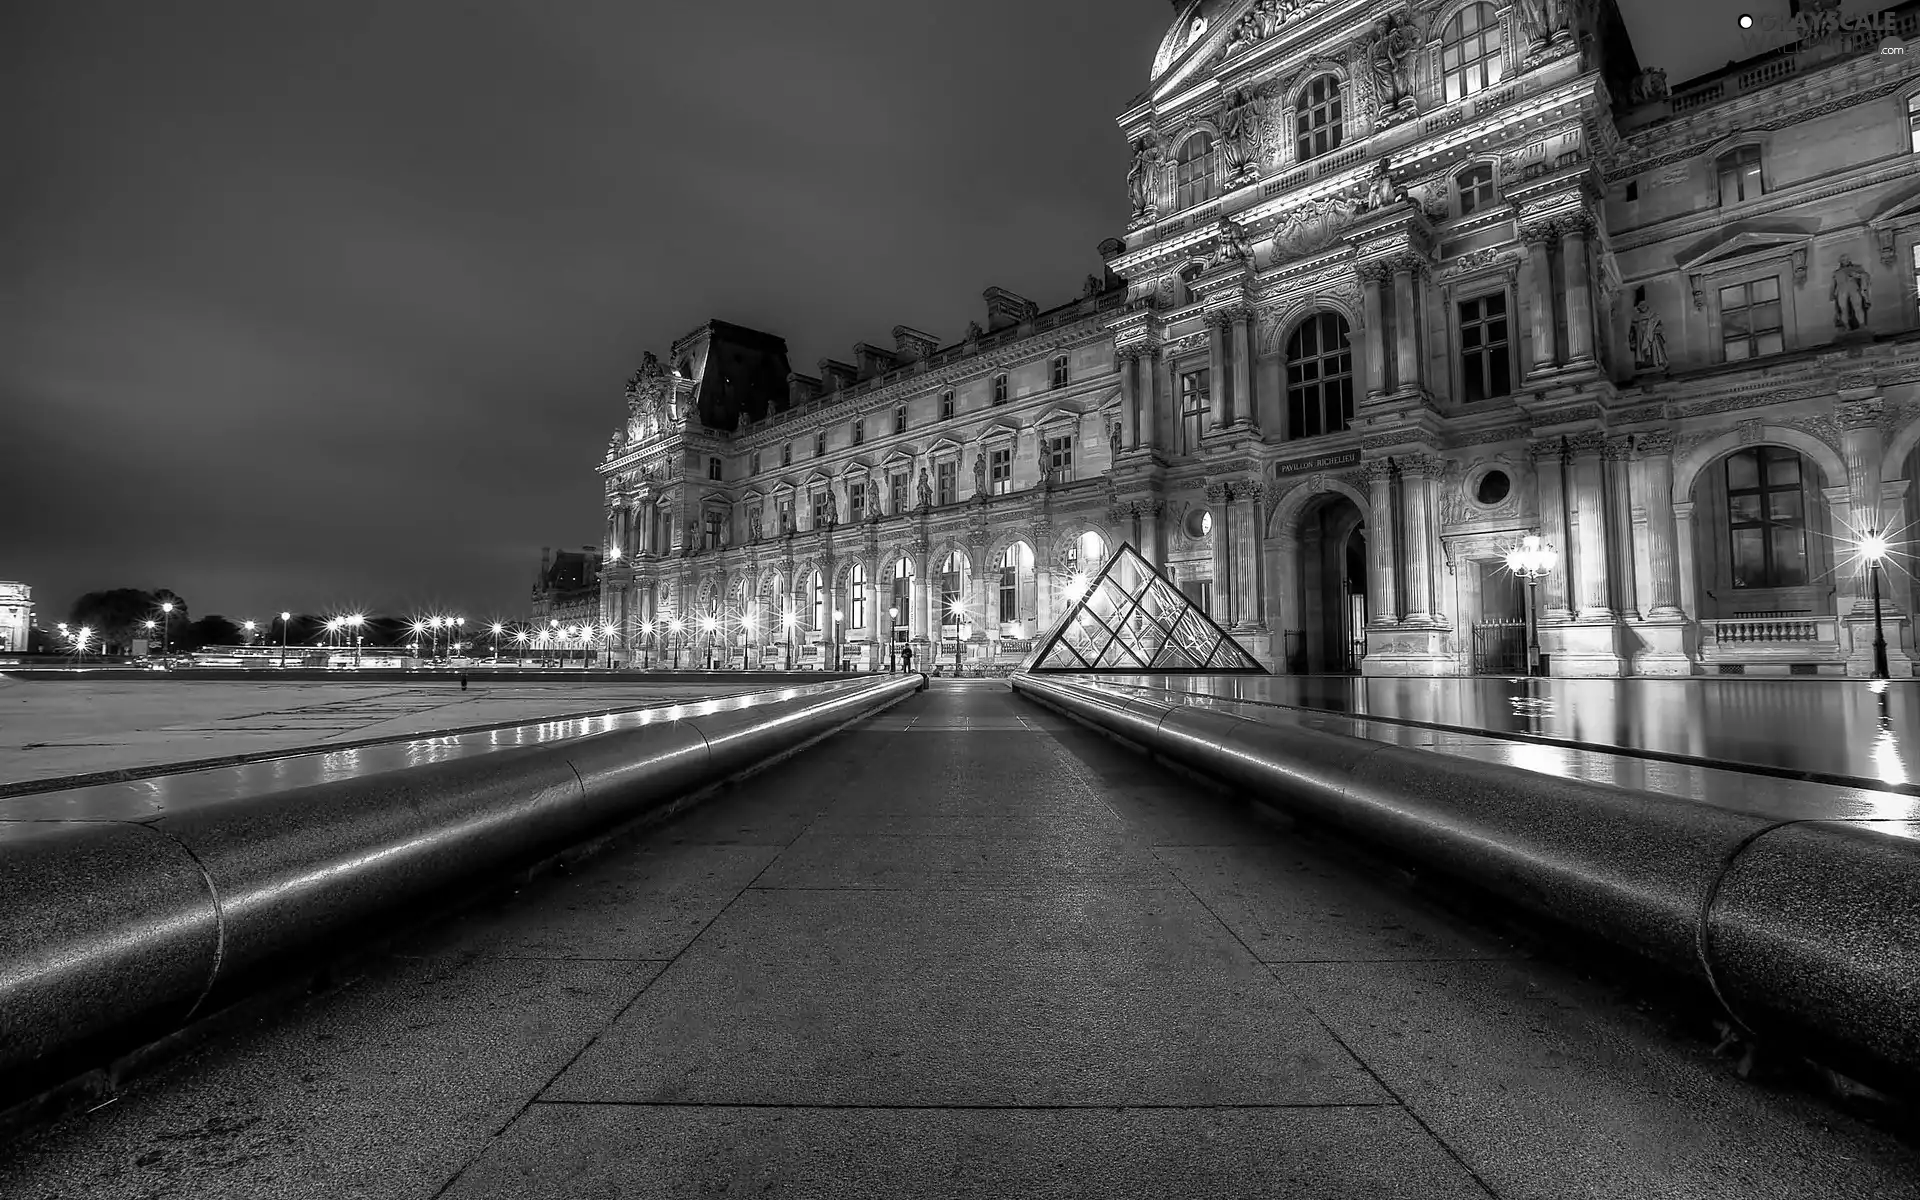 Fragment of the Louvre, Paris, night